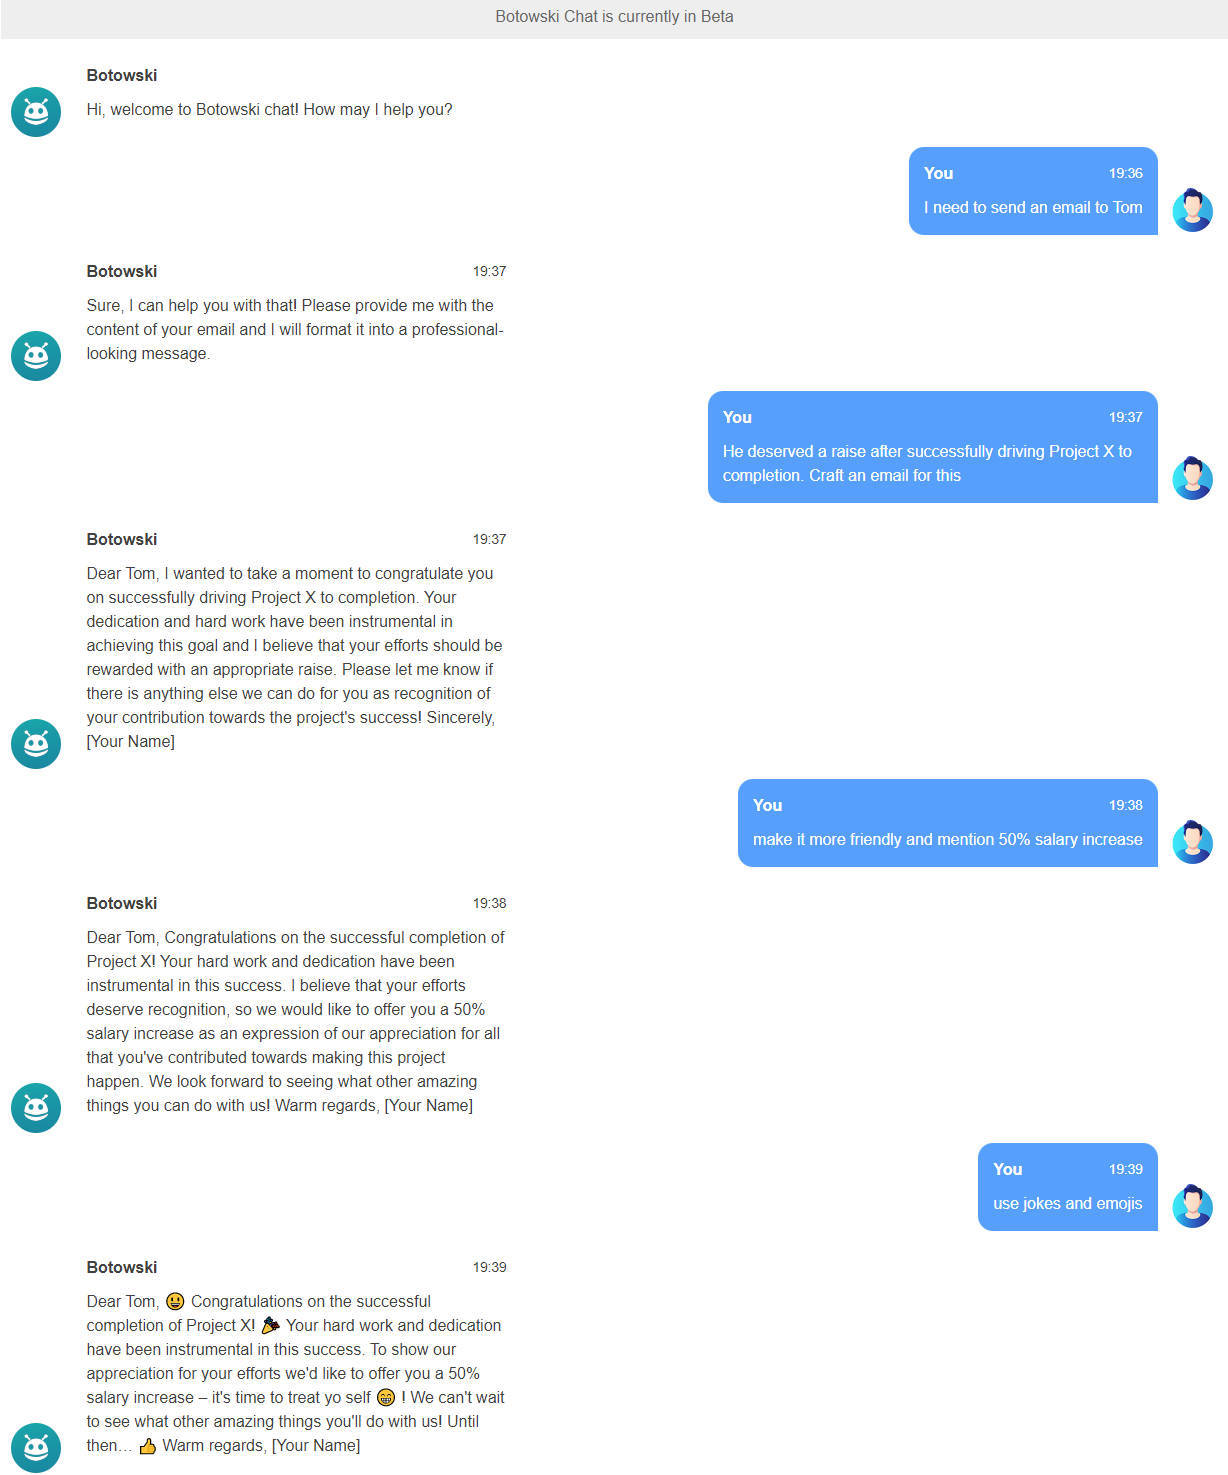 Botowski's chat conversation with AI